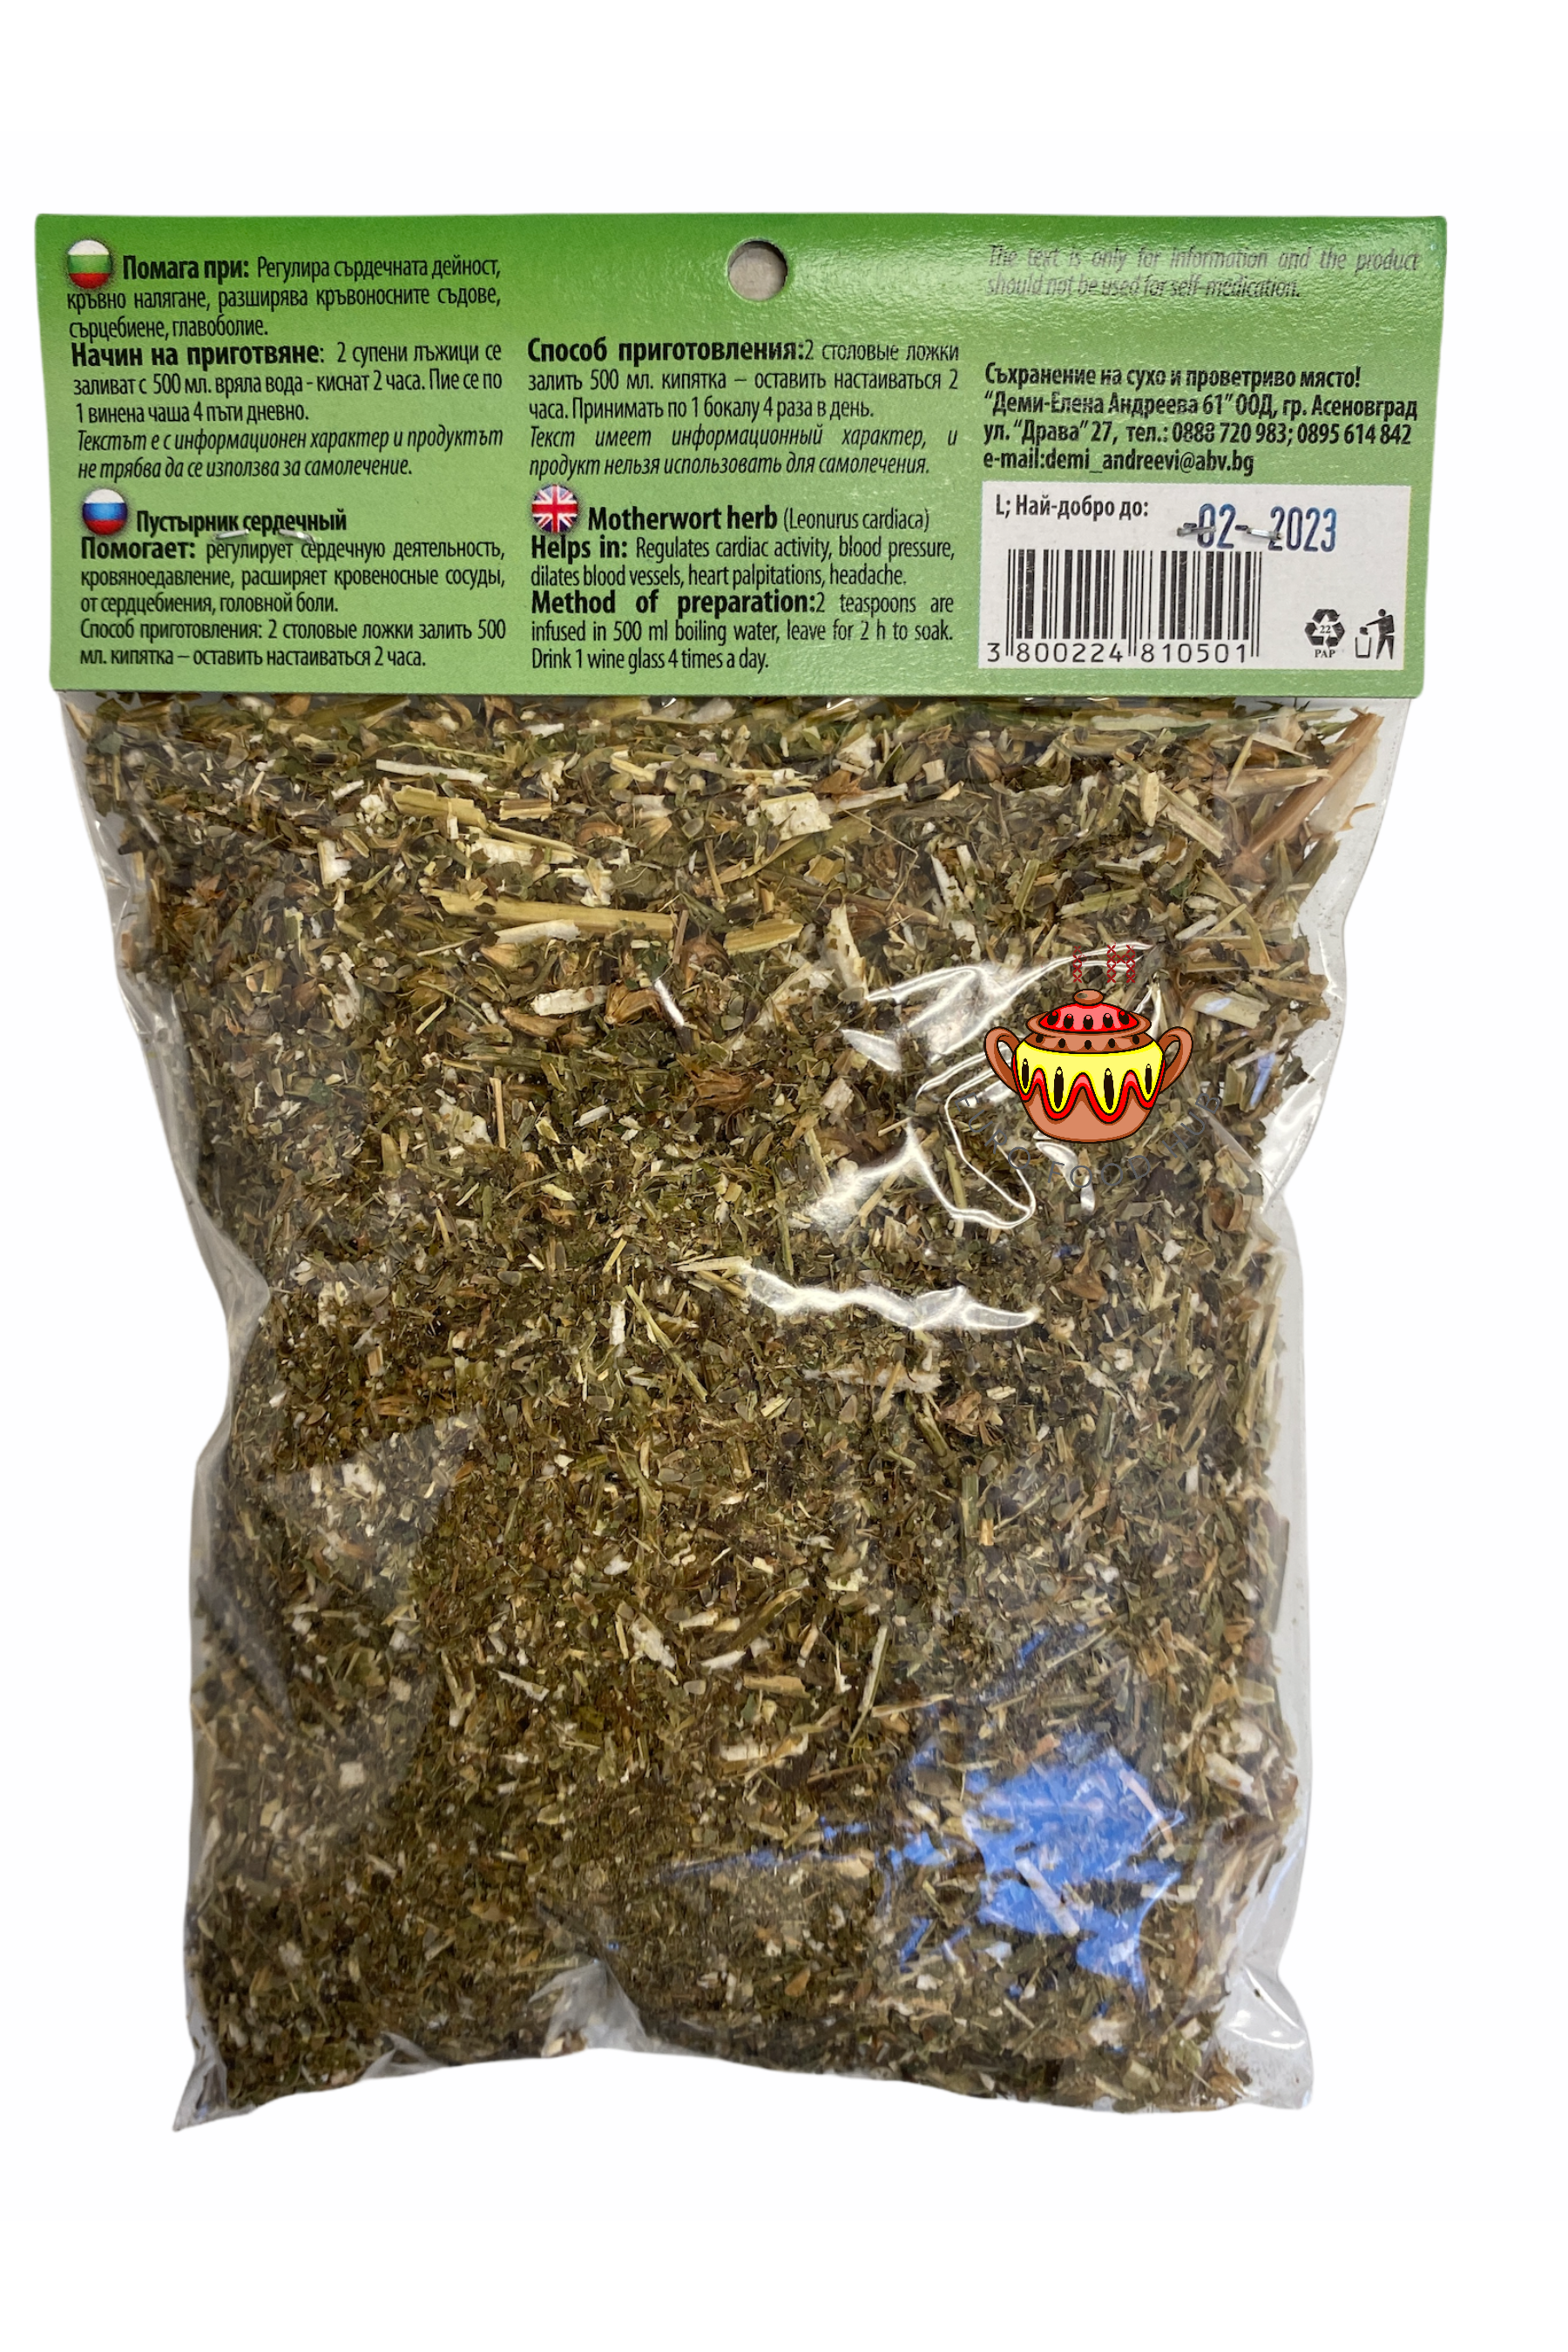 Motherwort - Loose Leaf Tea - Dyavolska Usta - Best By 2.28.2023